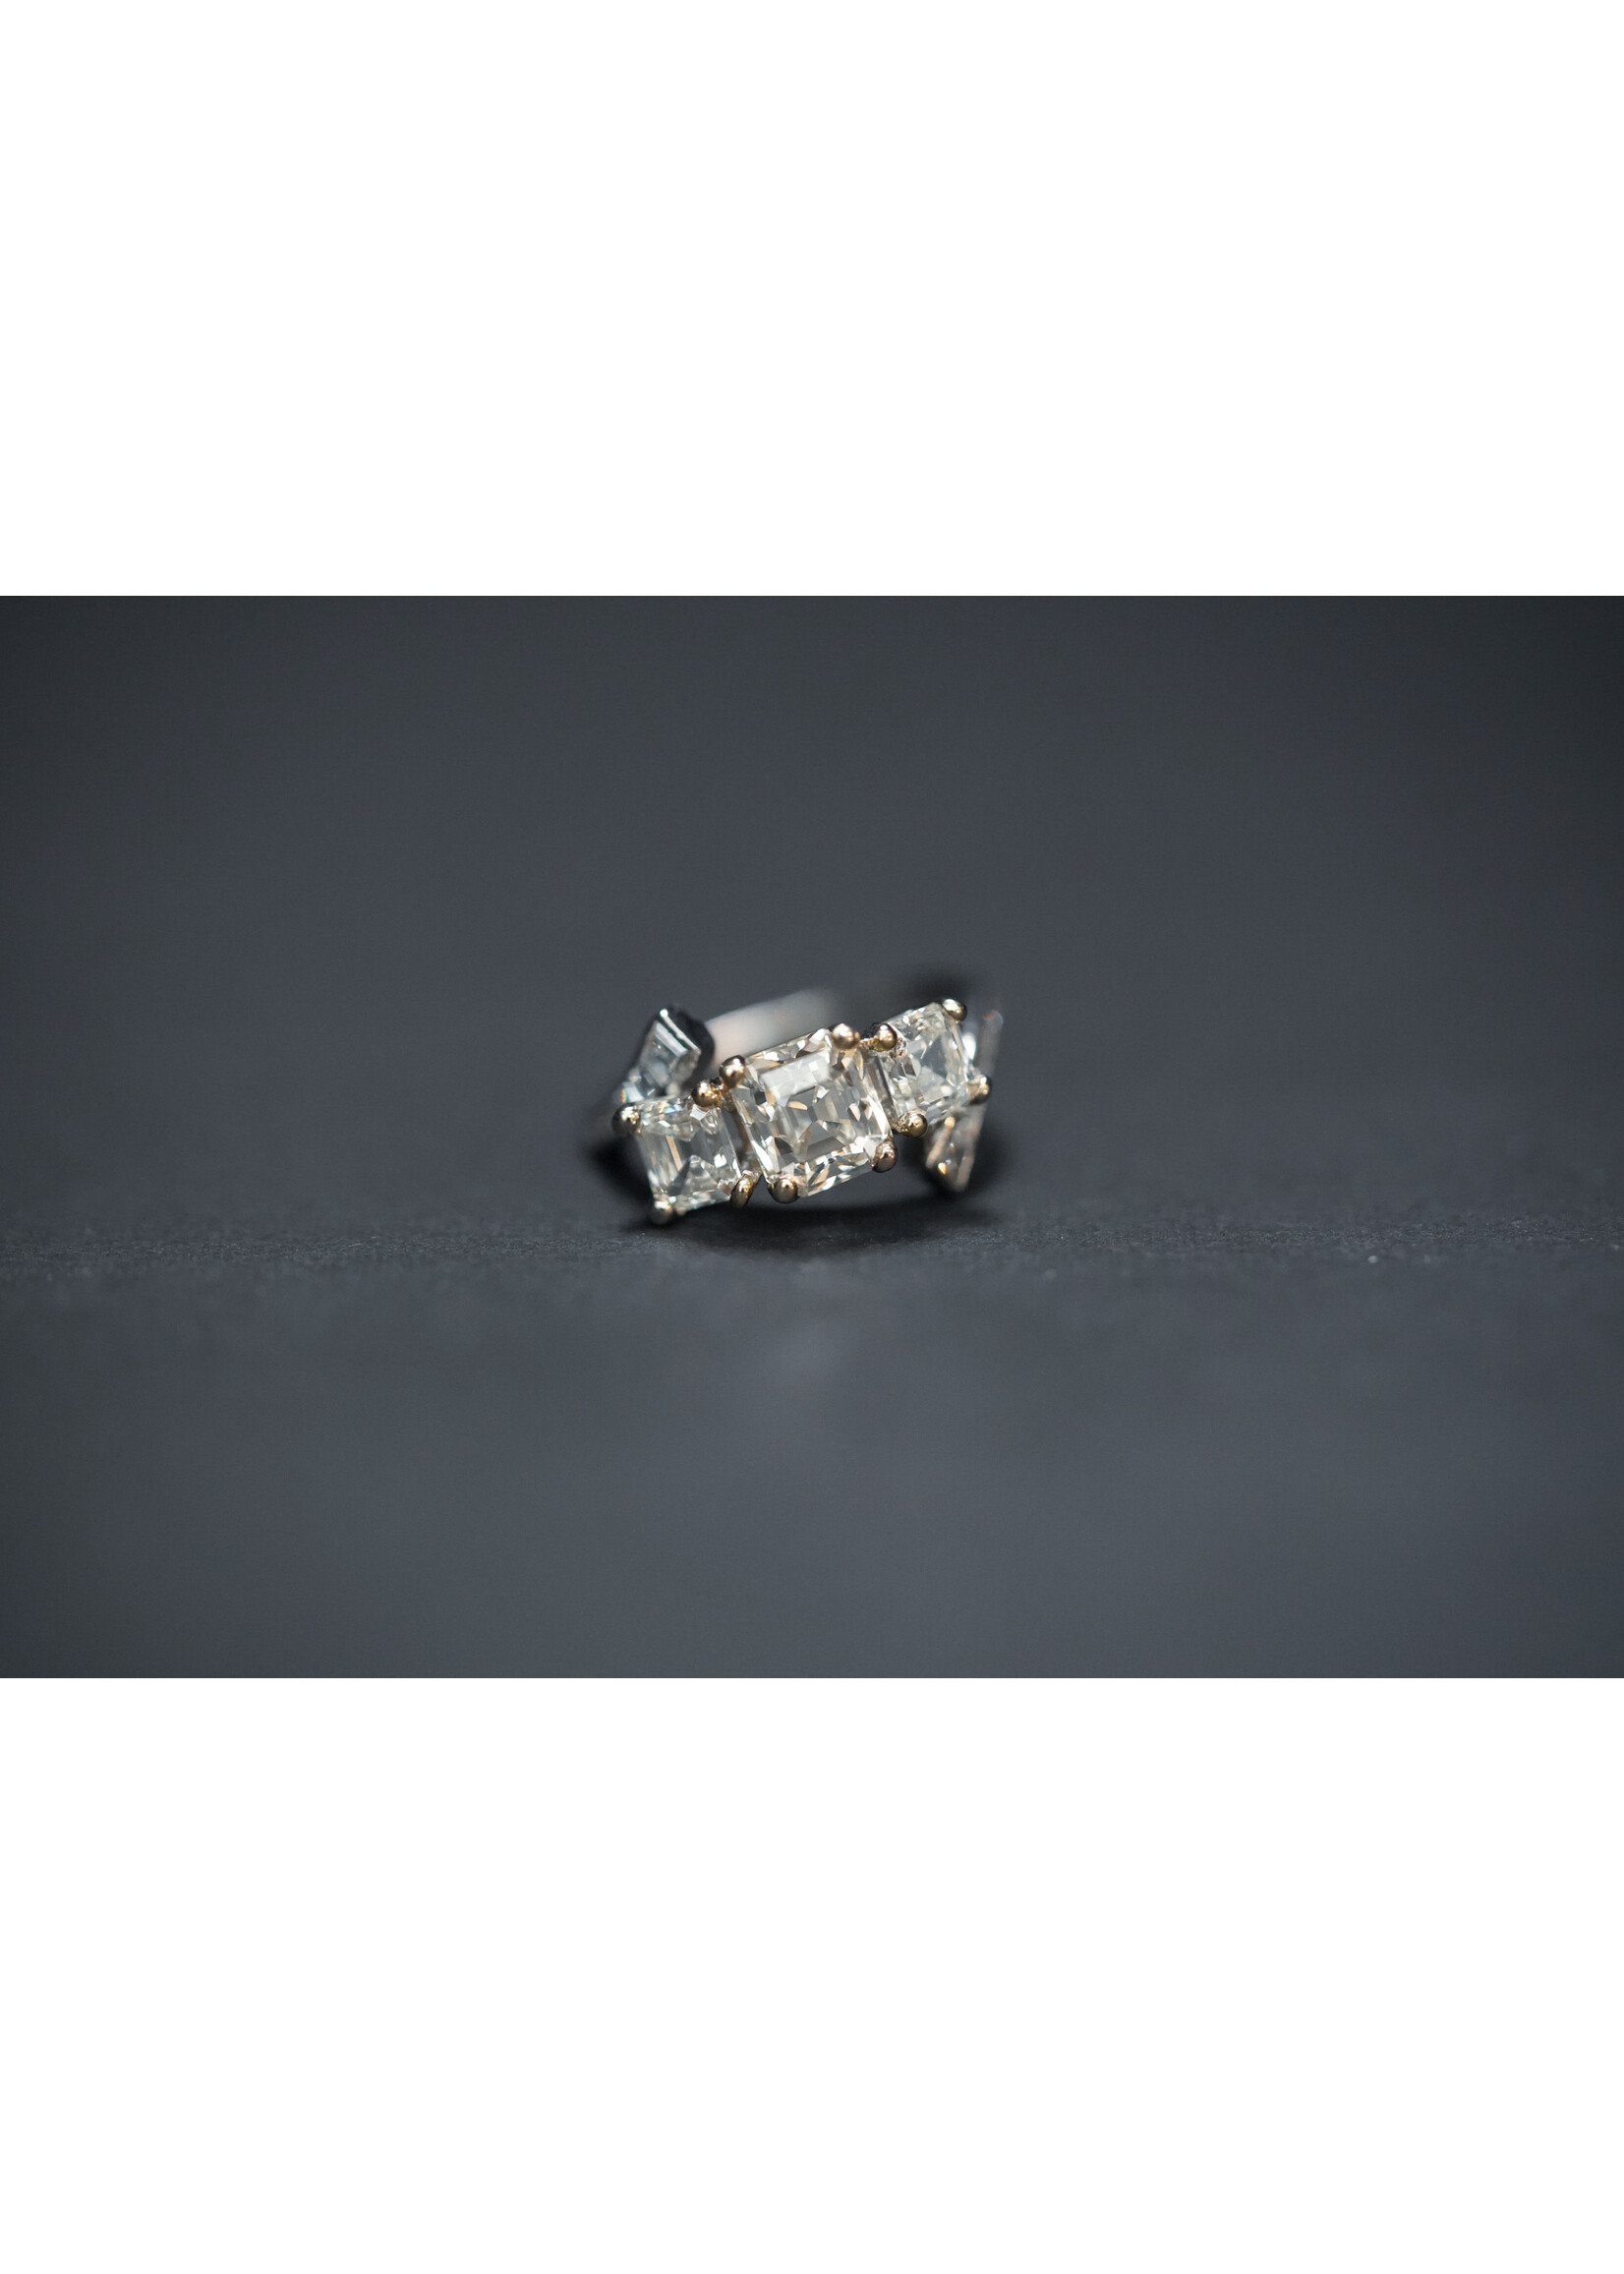 Platinum 5.16g 2.89ctw (1.65ctr) K/VS1 Asscher Diamond Three Stone Ring (size 5.5)